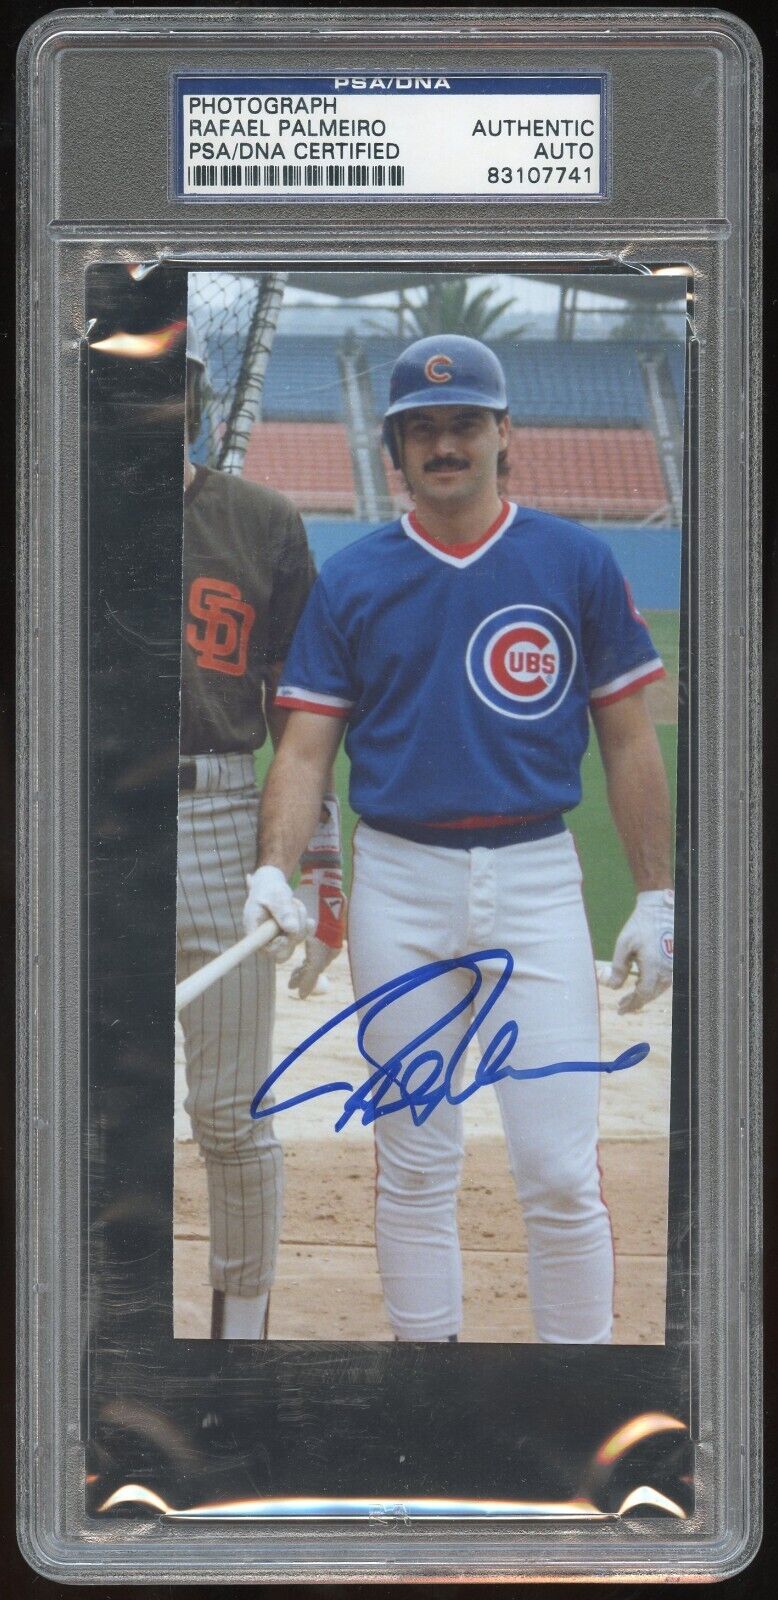 Rafael Palmeiro signed autograph auto 3x7 Photo Baseball Player Chicago Cubs